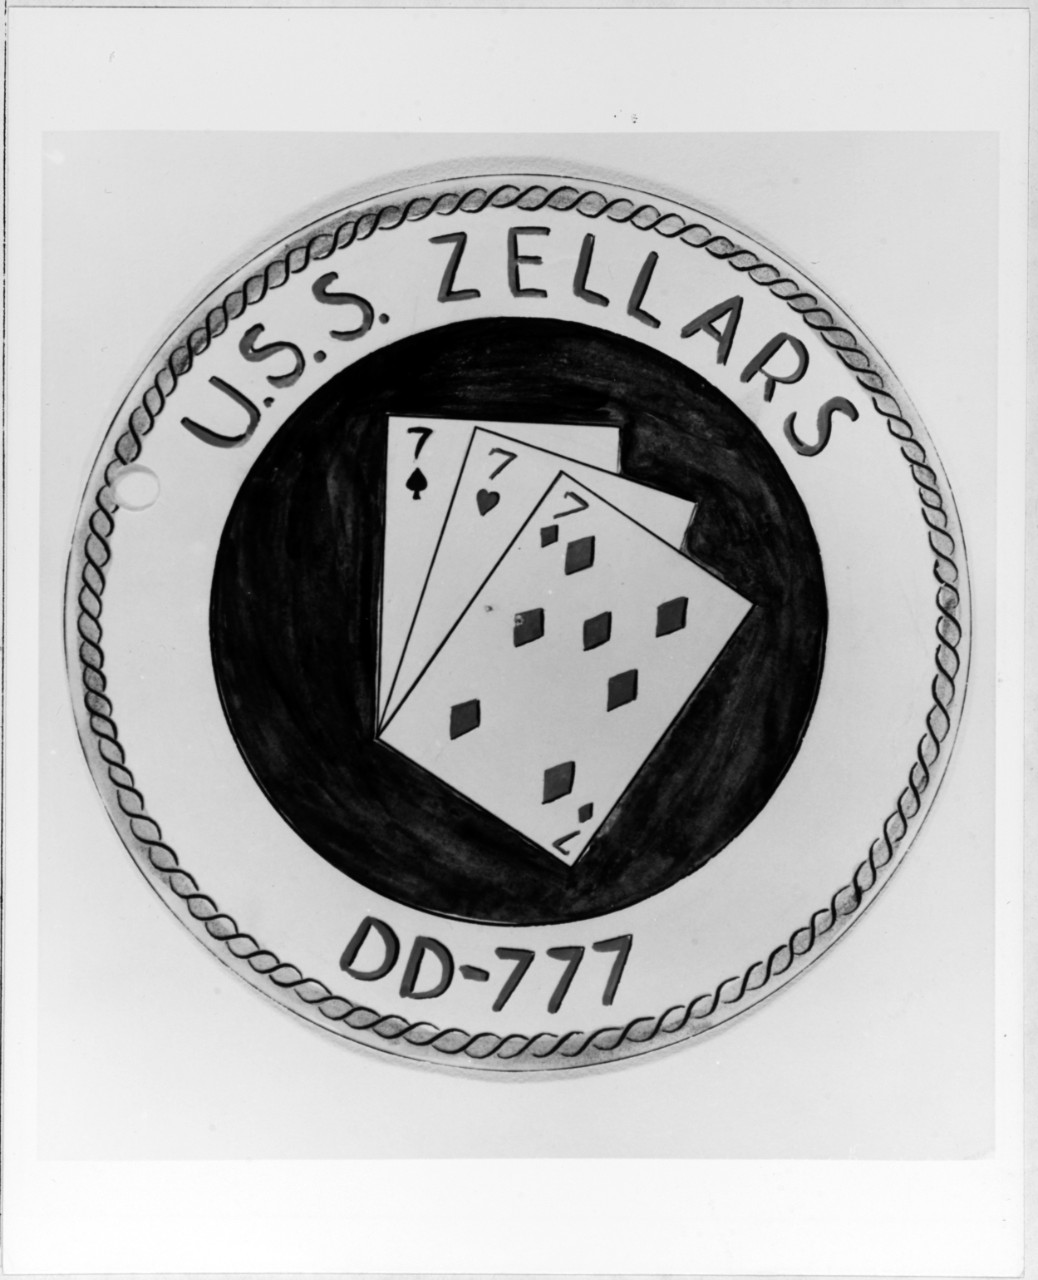 Insignia:  USS ZELLARS (DD-777)